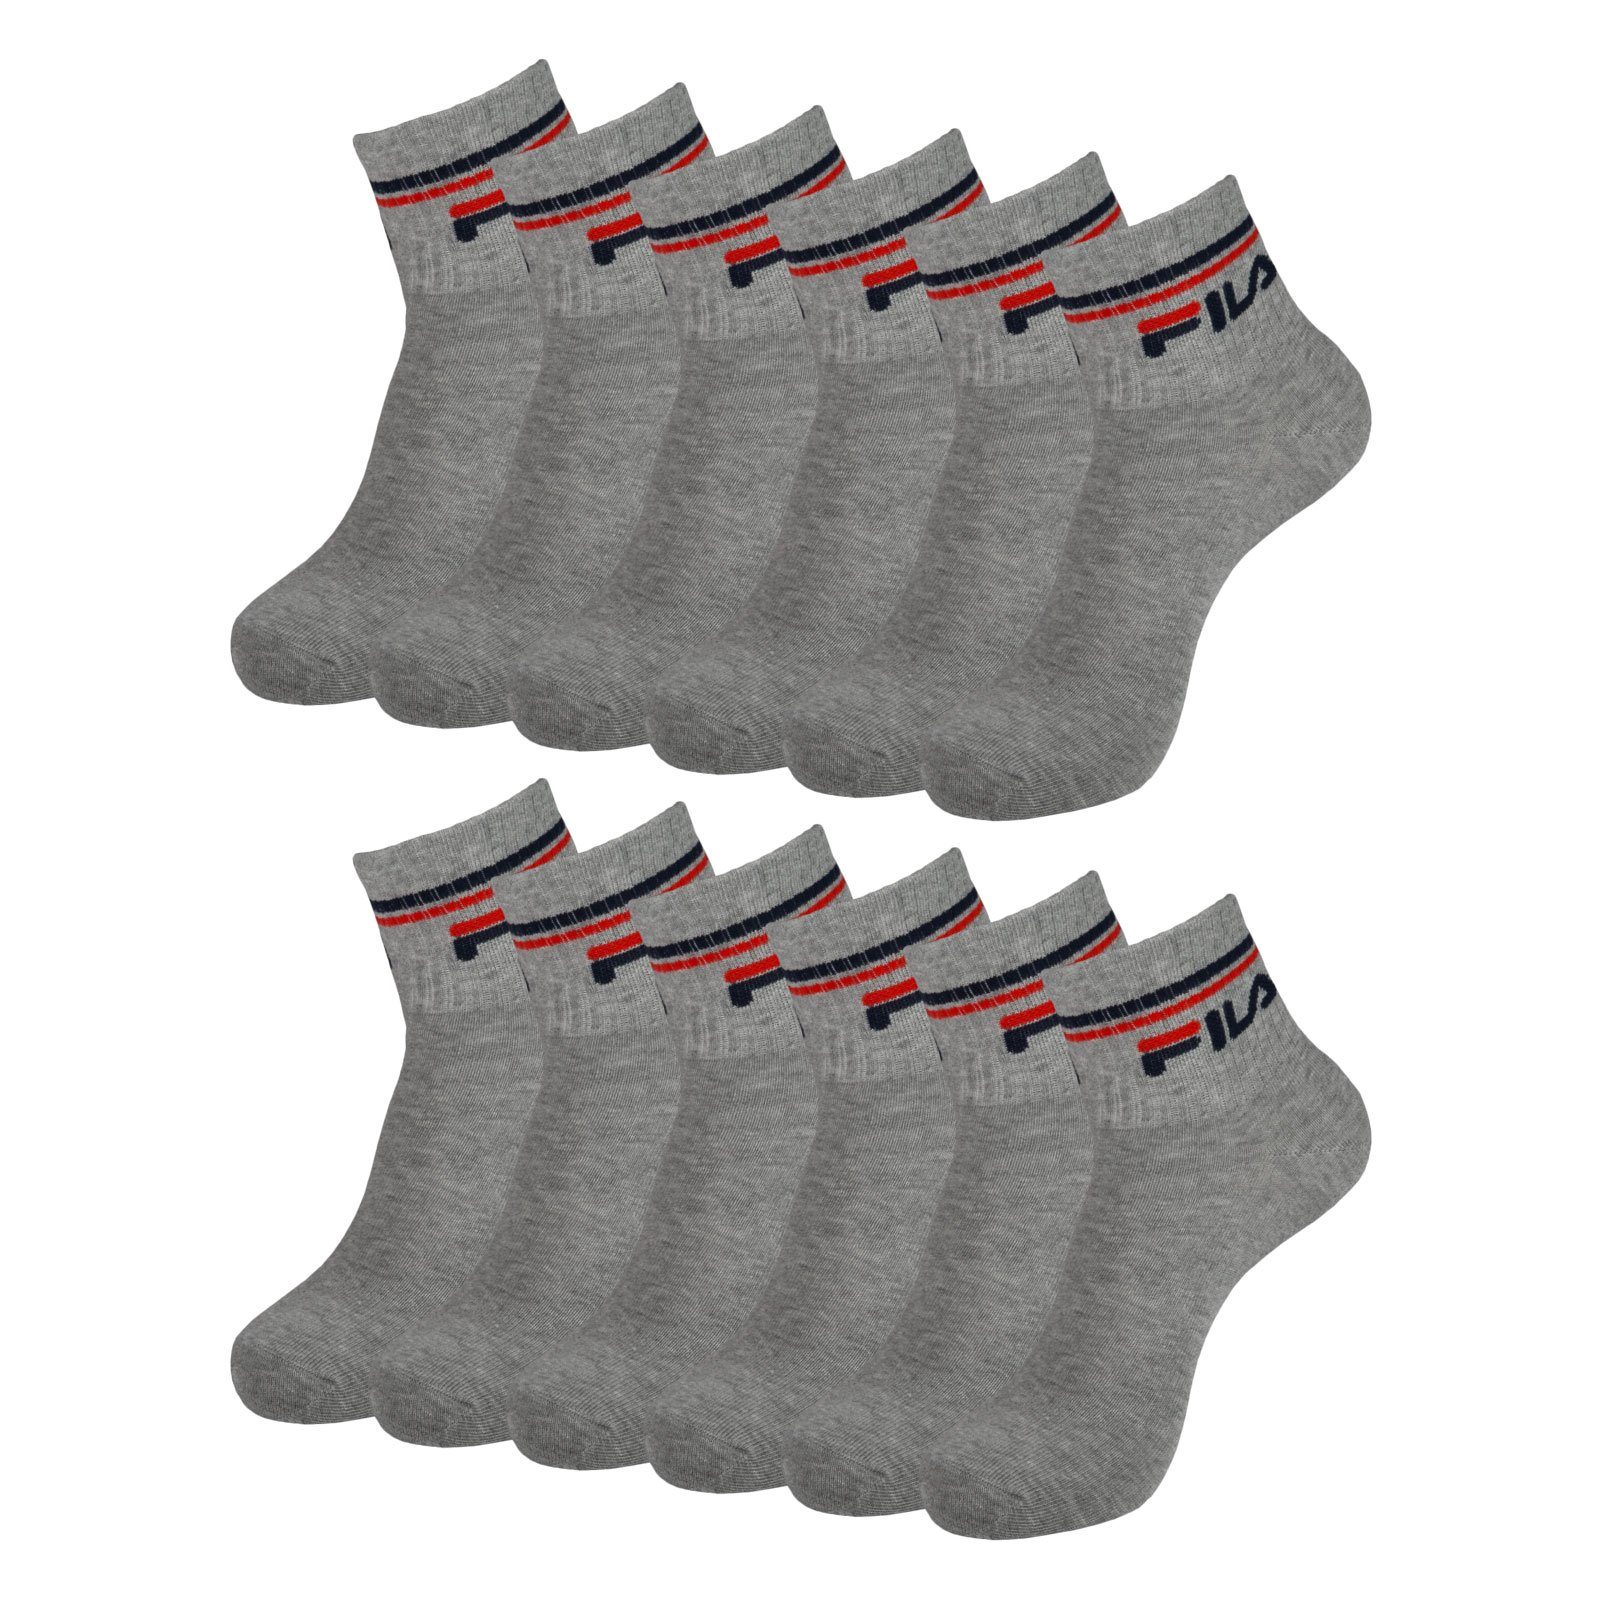 Fila Kurzsocken Quarter Socks Calza (6-Paar) im sportlichen Look mit Rippbündchen 400 grey melange